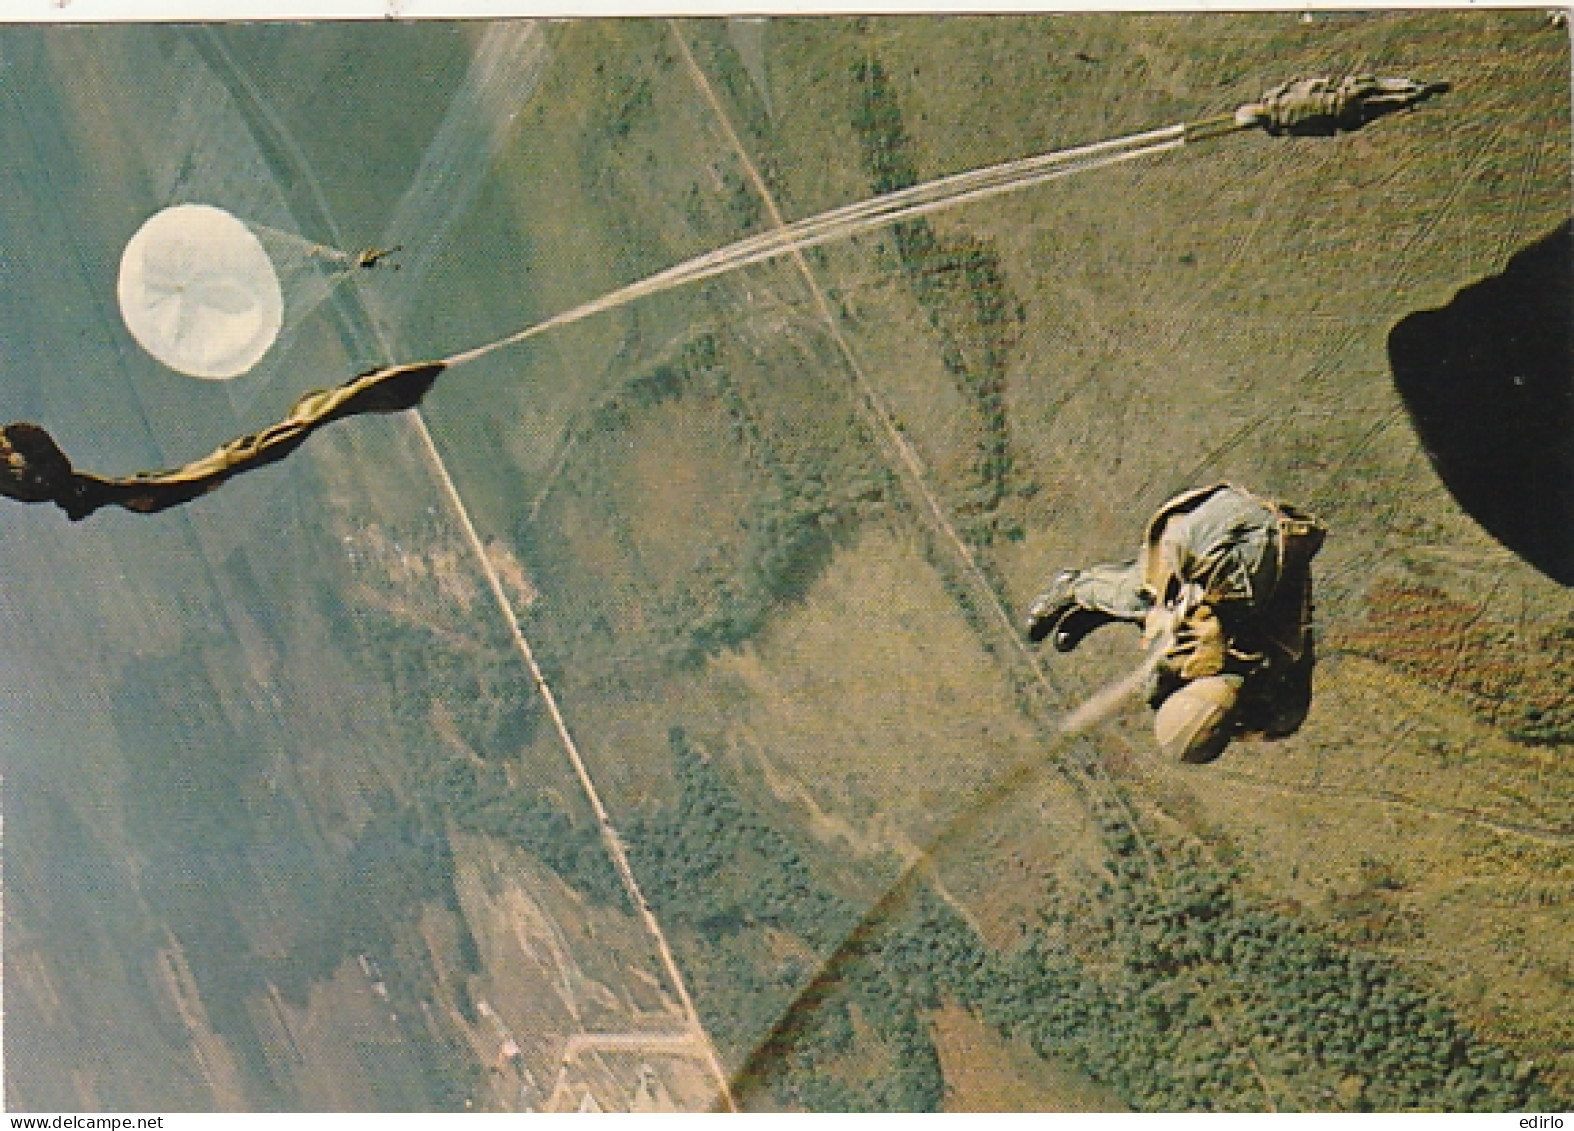 ***  PAU MILITARIA ***  Parachutistes Pau Photo  Dujardin- Neuve TTB - Parachutting